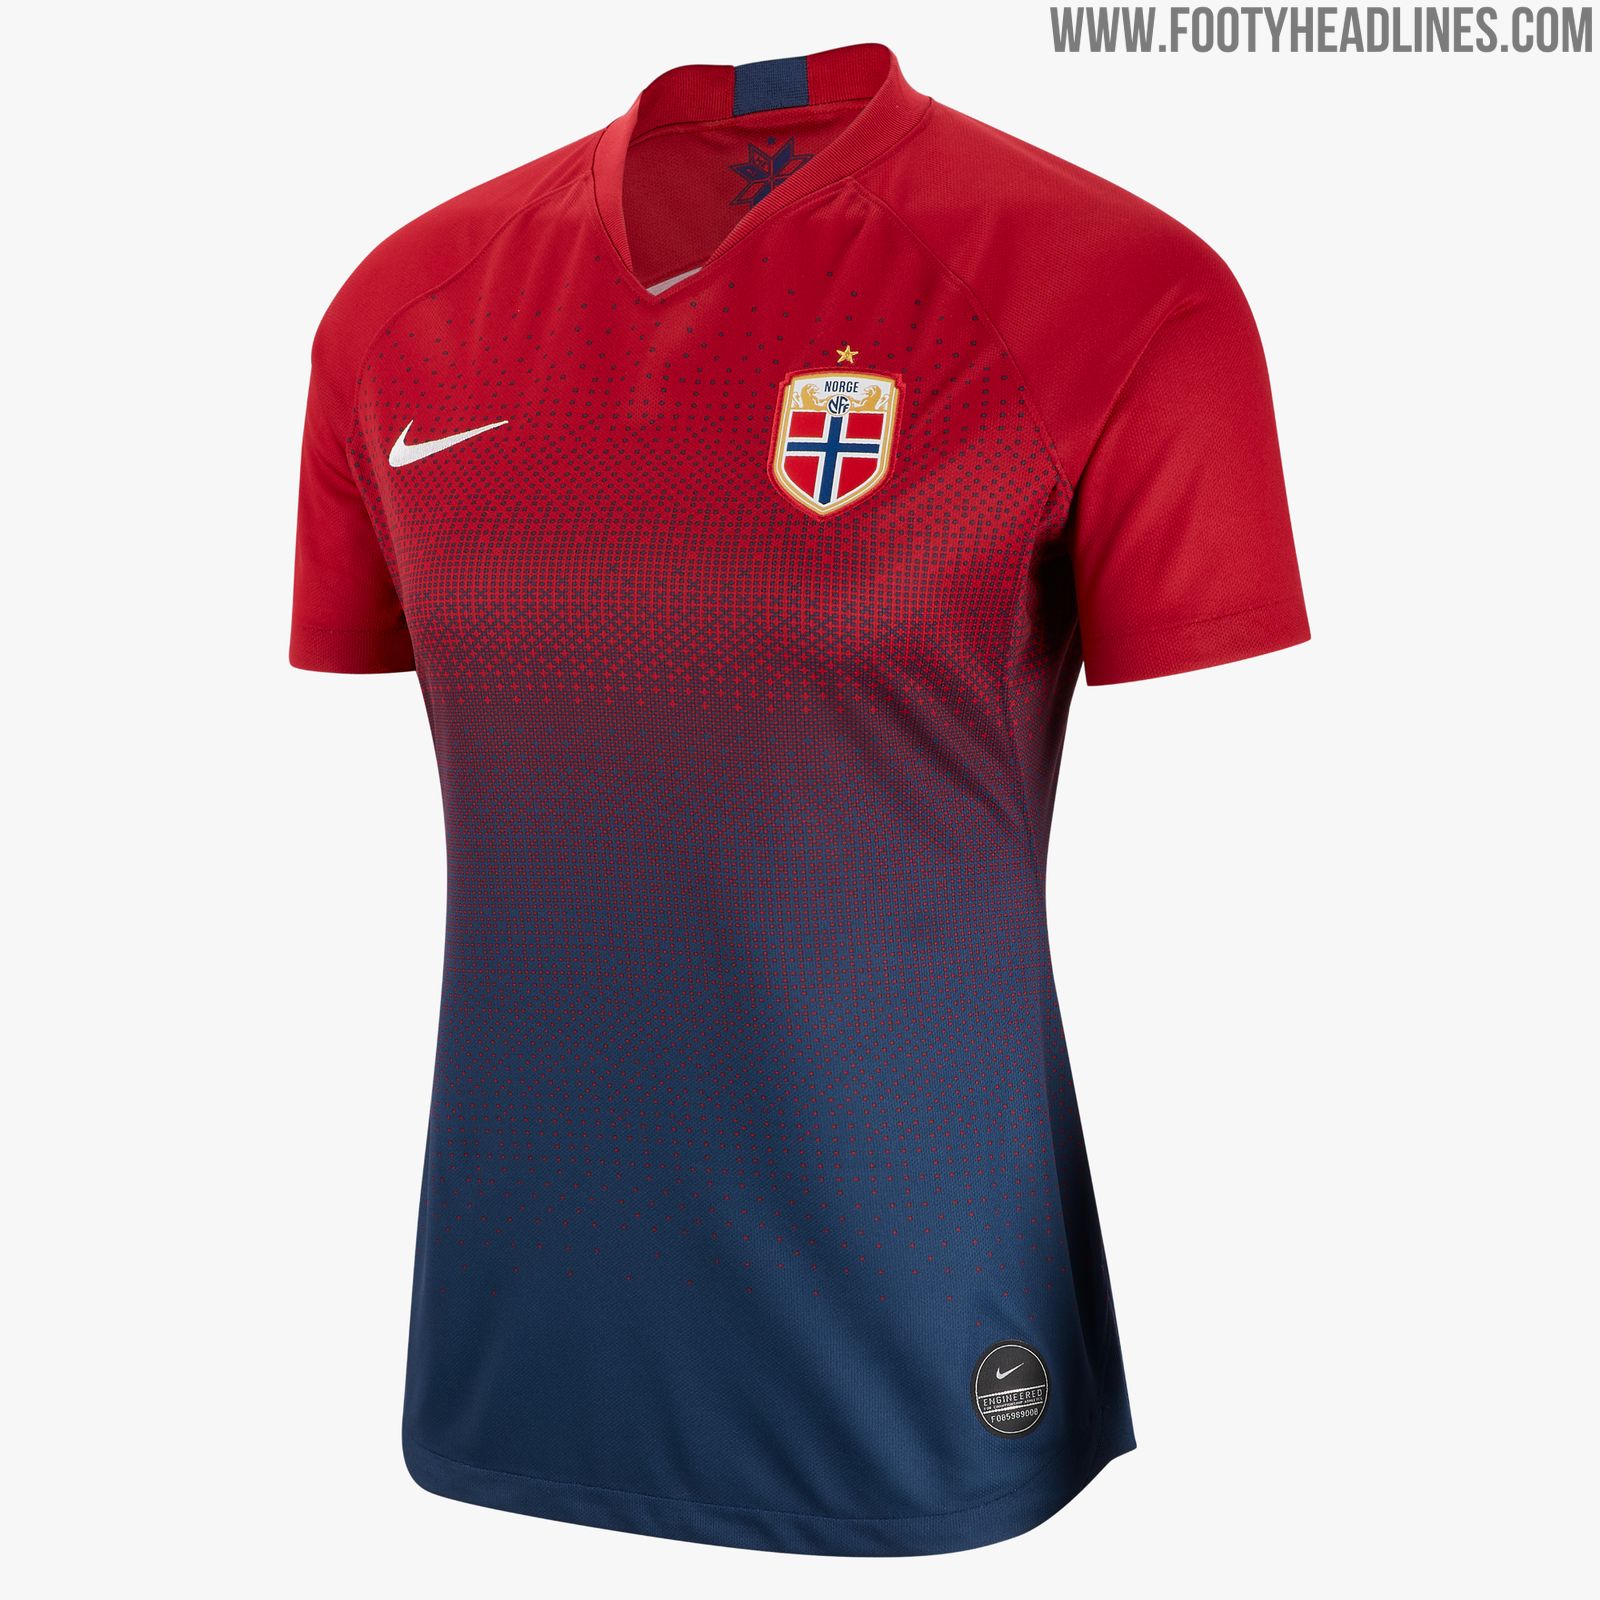 Nike Norway 2019 Women's World Cup Home Kit Revealed - Footy Headlines